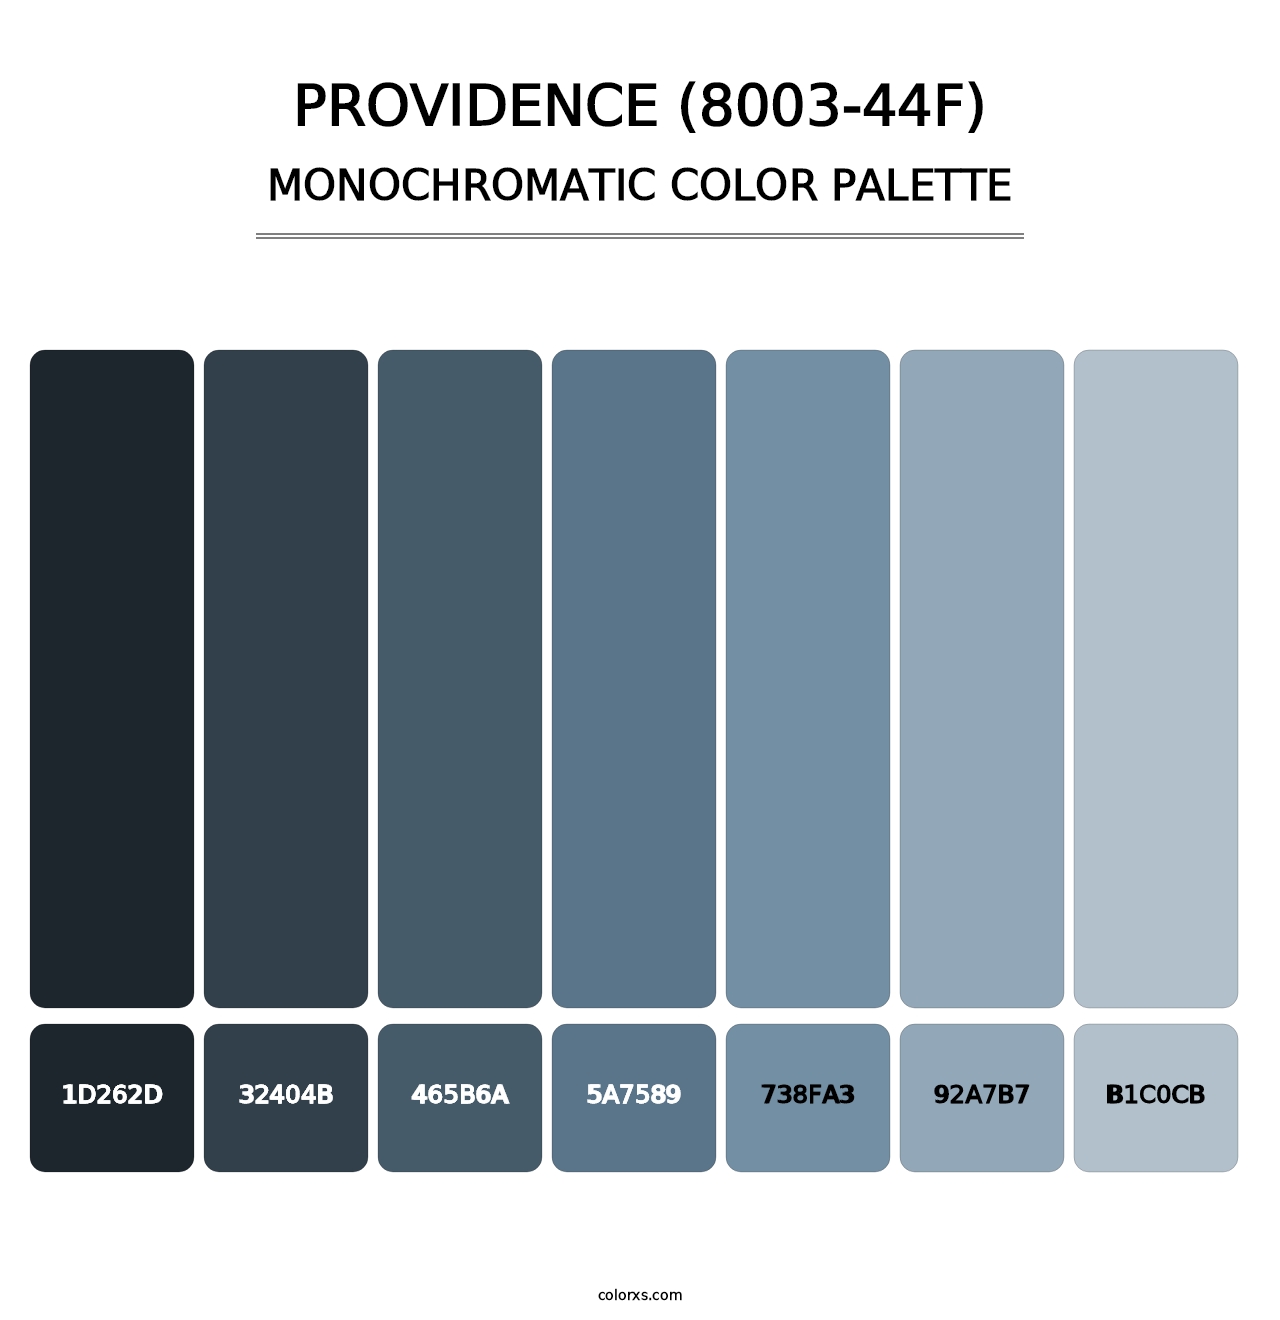 Providence (8003-44F) - Monochromatic Color Palette